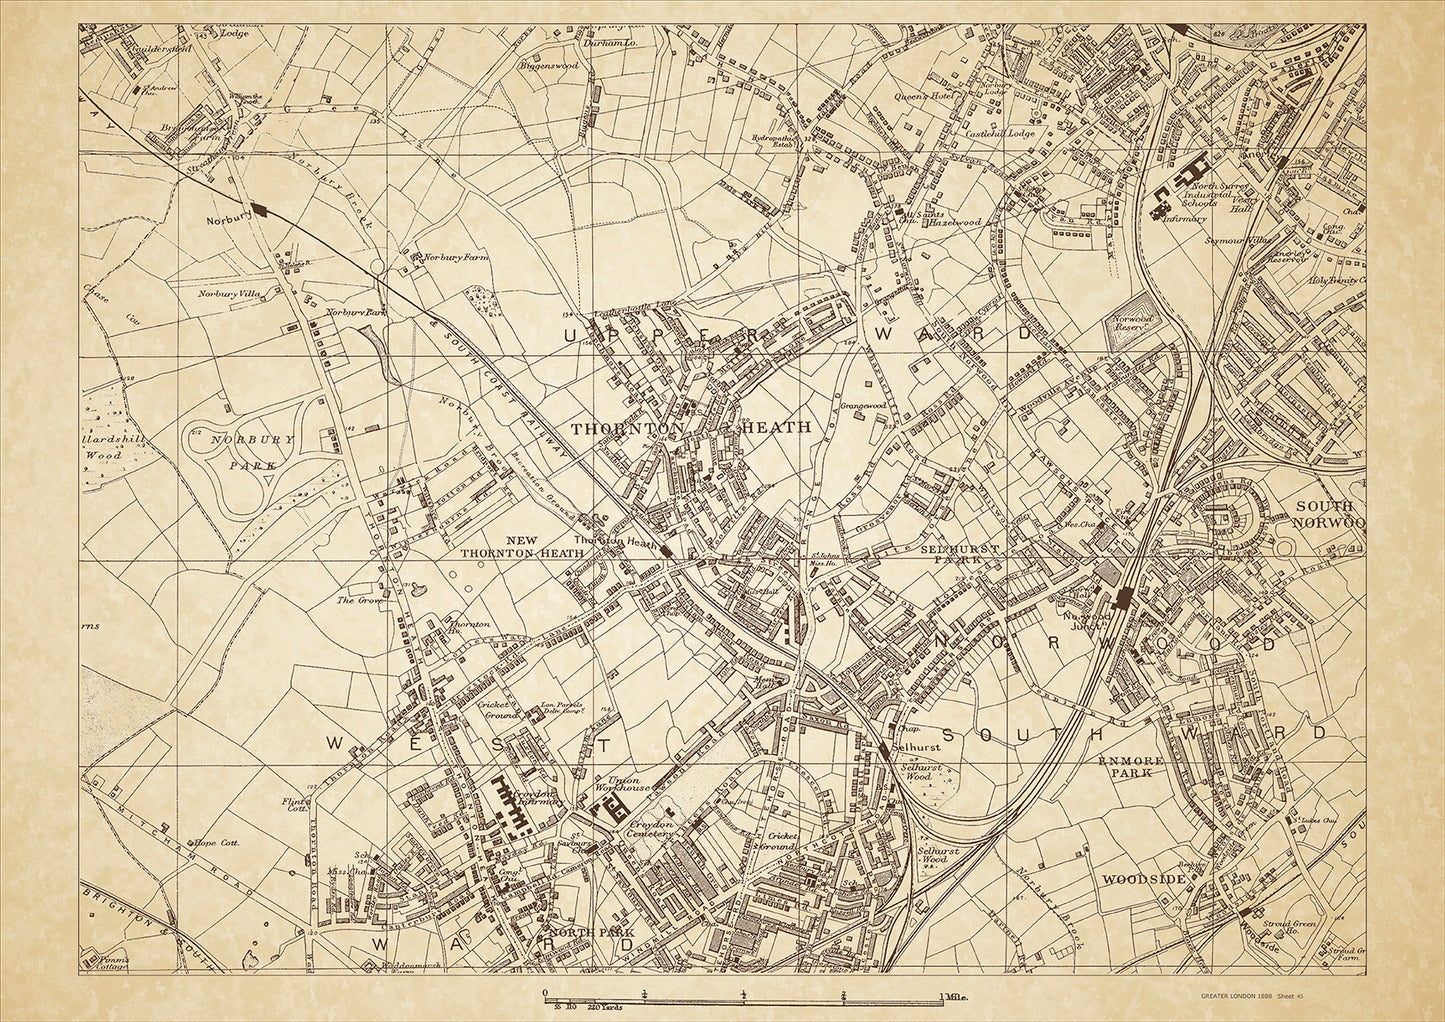 Greater London in 1888 Series - showing Thornton Heath, Selhurst Park, Croydon (north), South Norwood (west), Penge (southwest), Norbury Park, Woodside - sheet 45